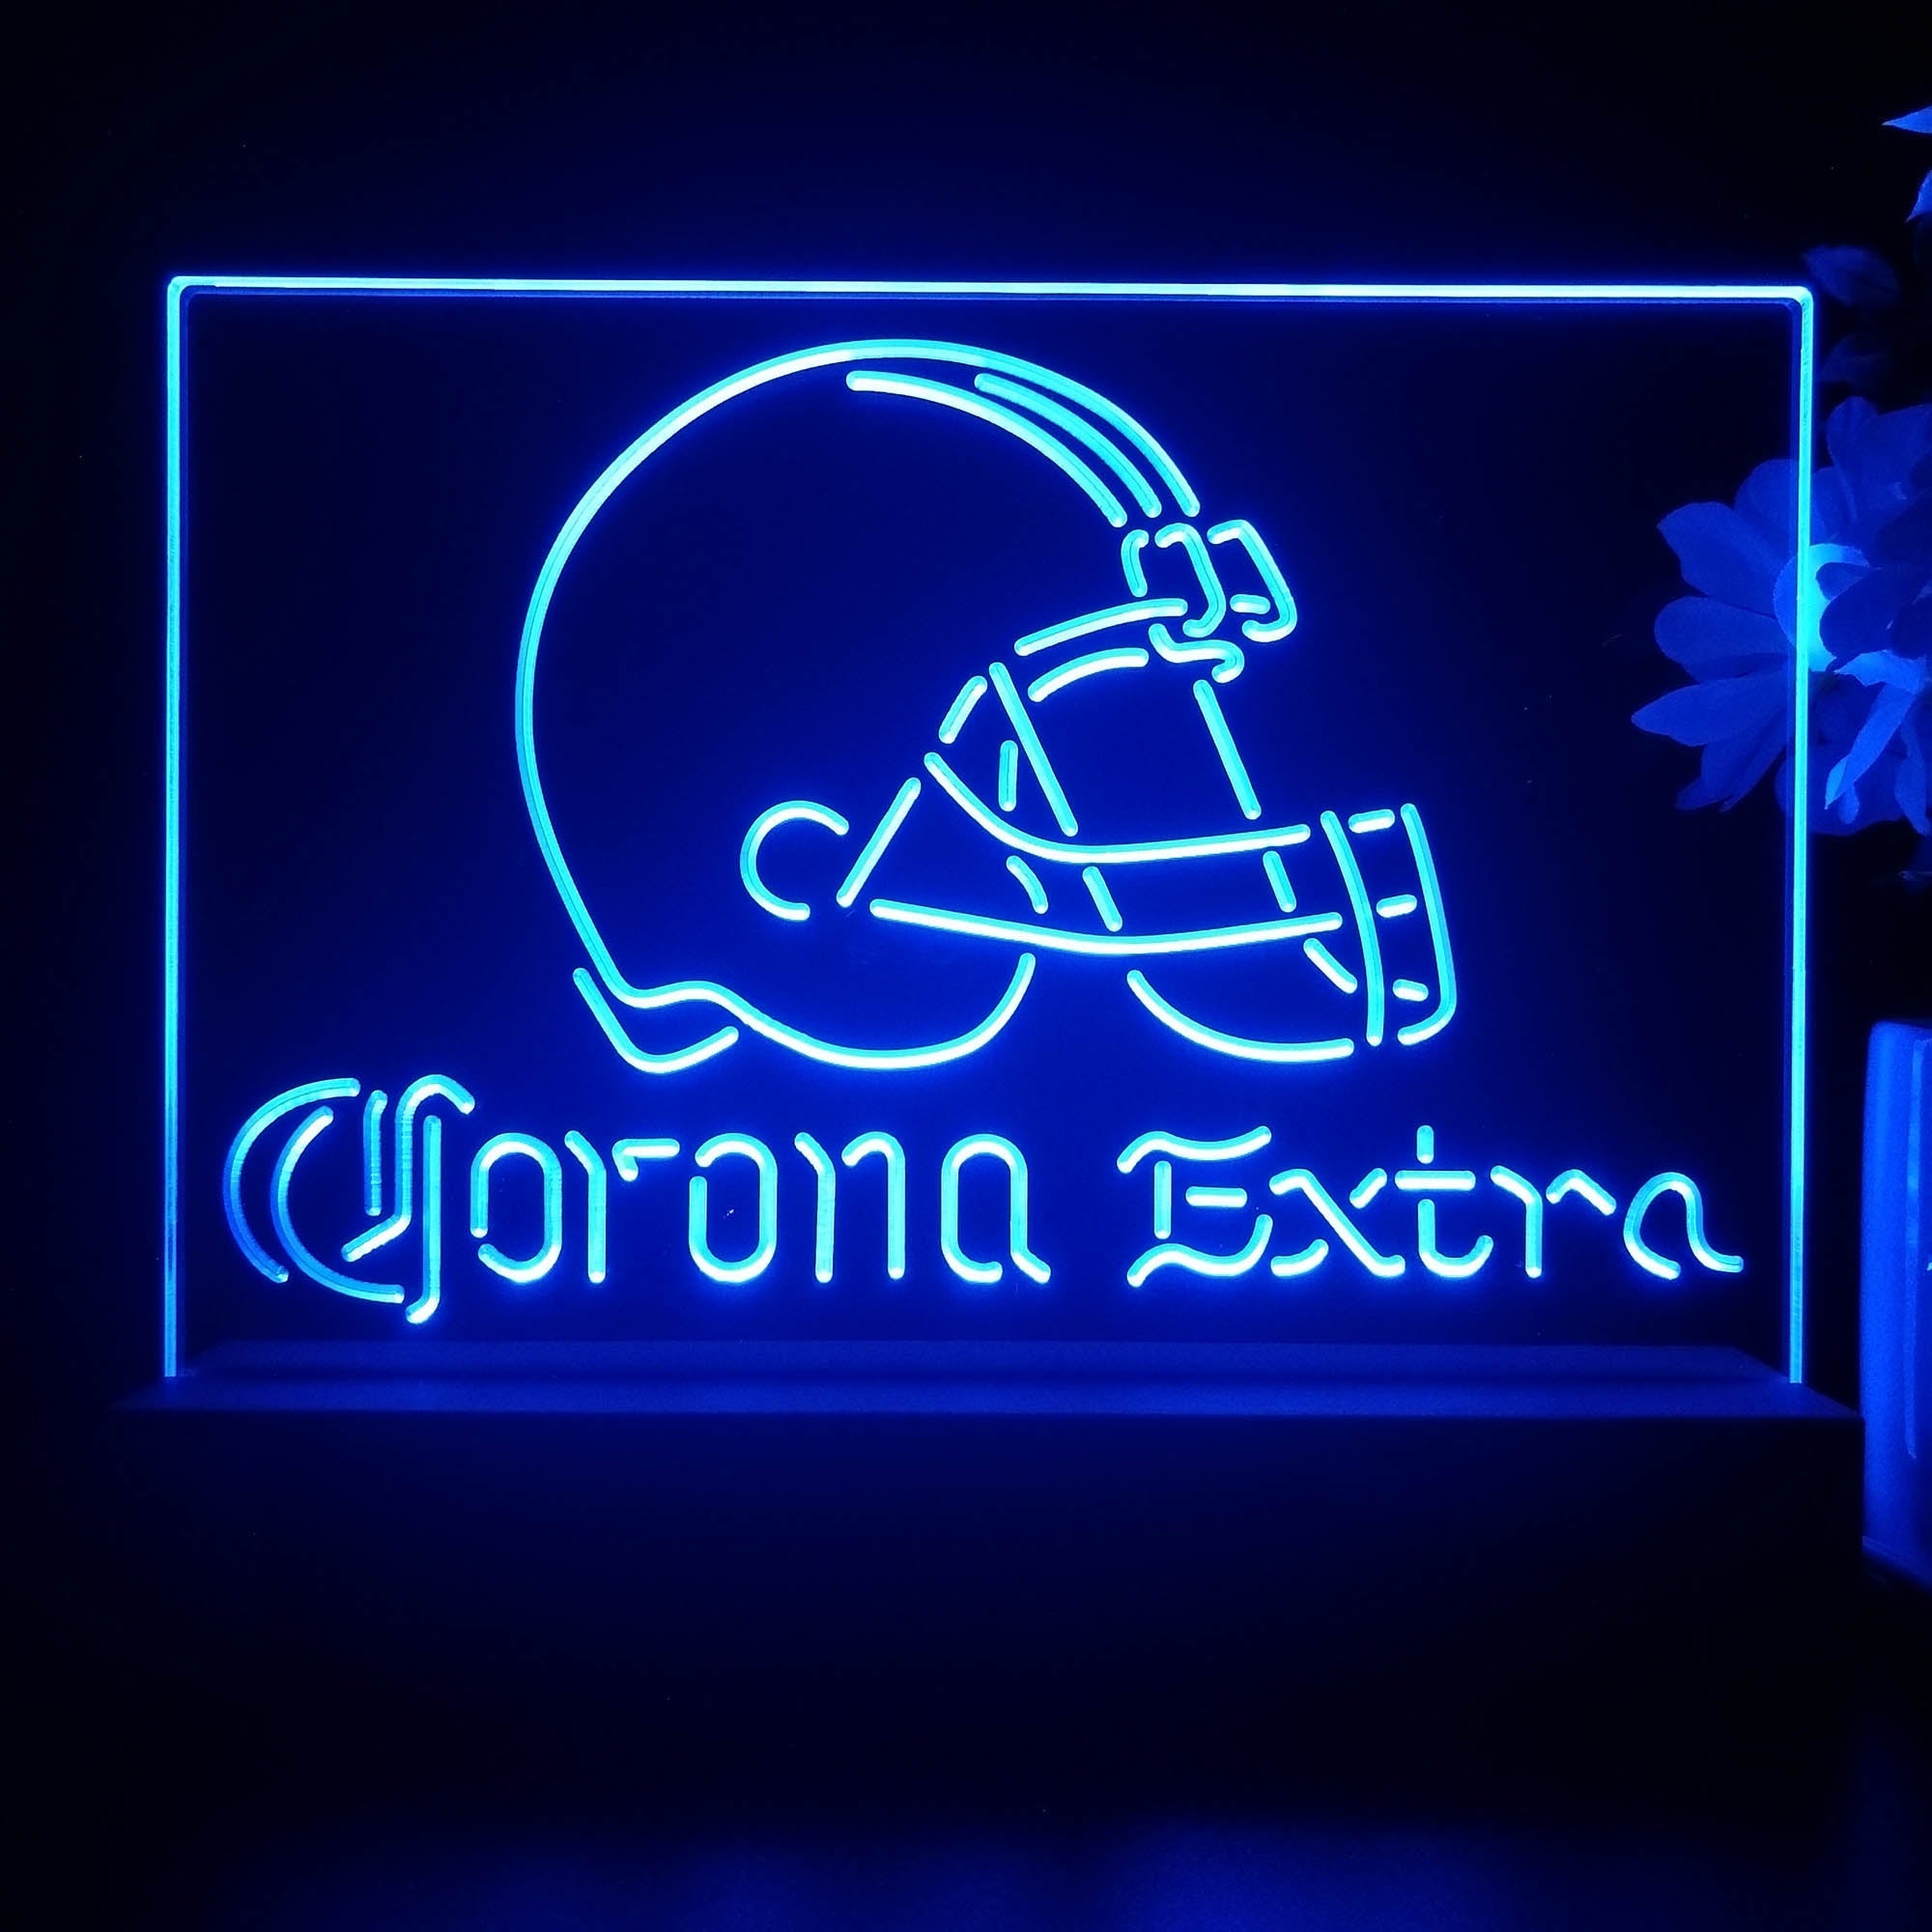 Corona Extra Bar Cleveland Browns Est. 1946 Night Light Pub Bar Lamp